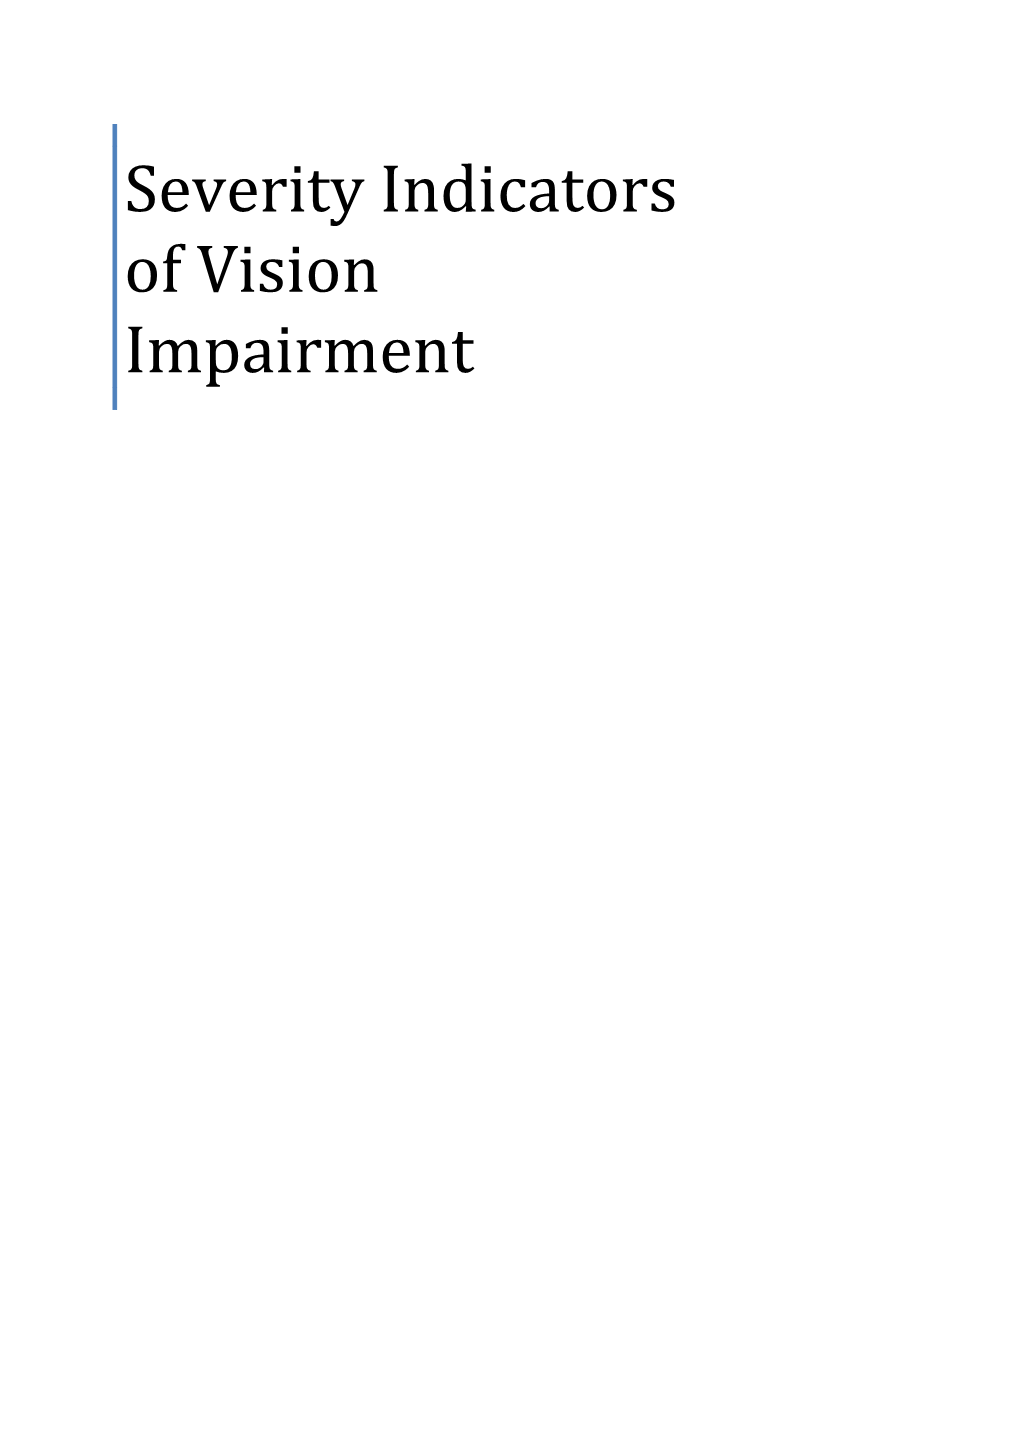 Severity Indicators of Vision Impairment